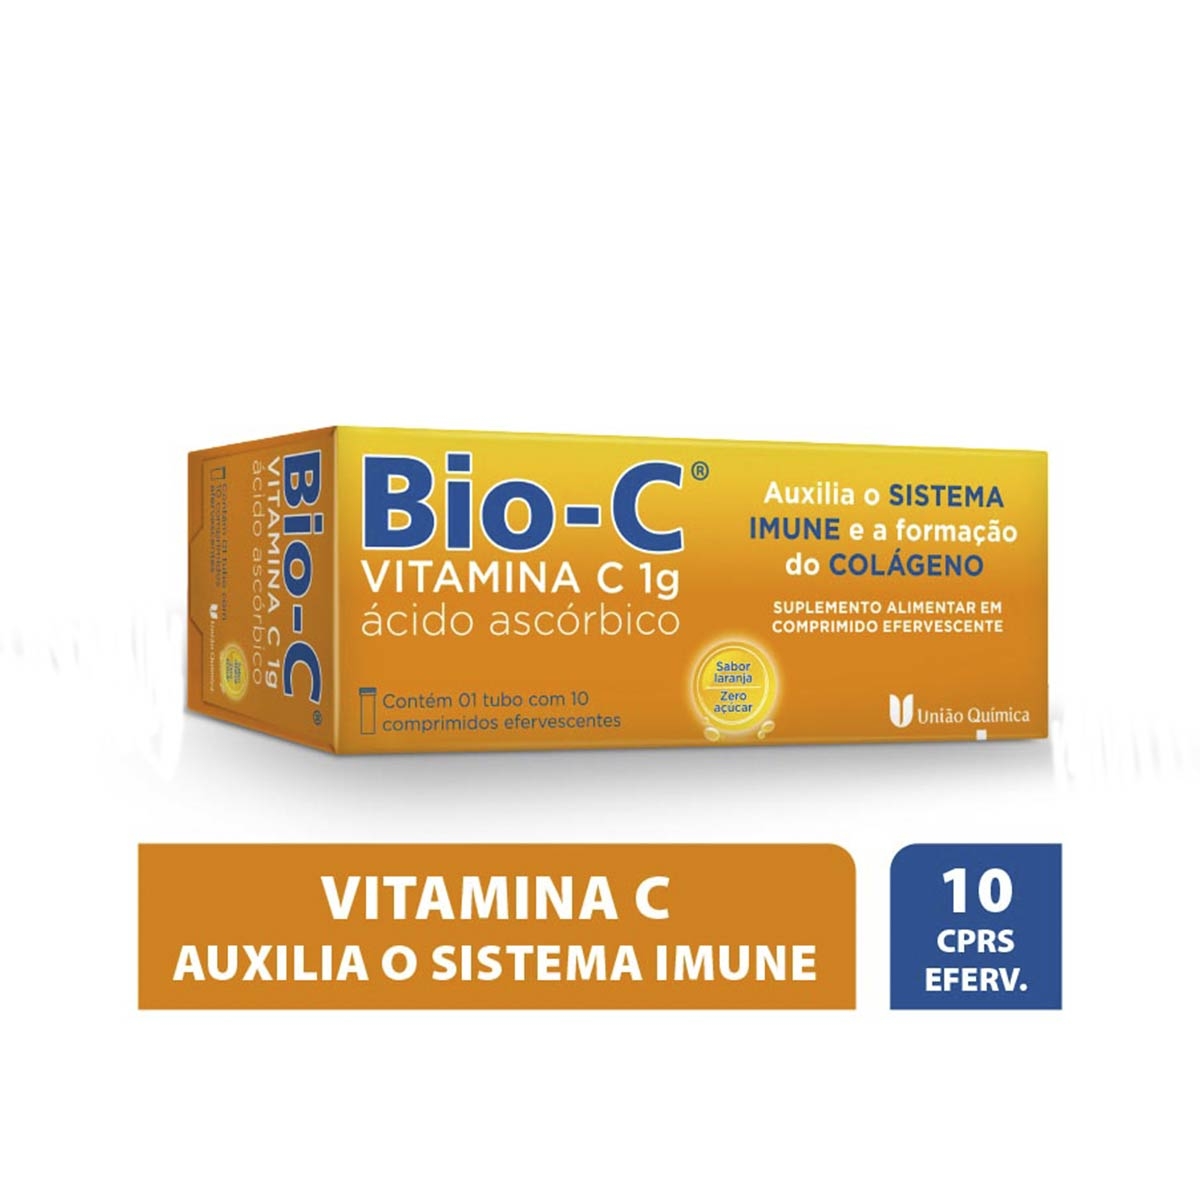 Vitamina C Alter 1g Laranja 20 comprimidos efervescentes